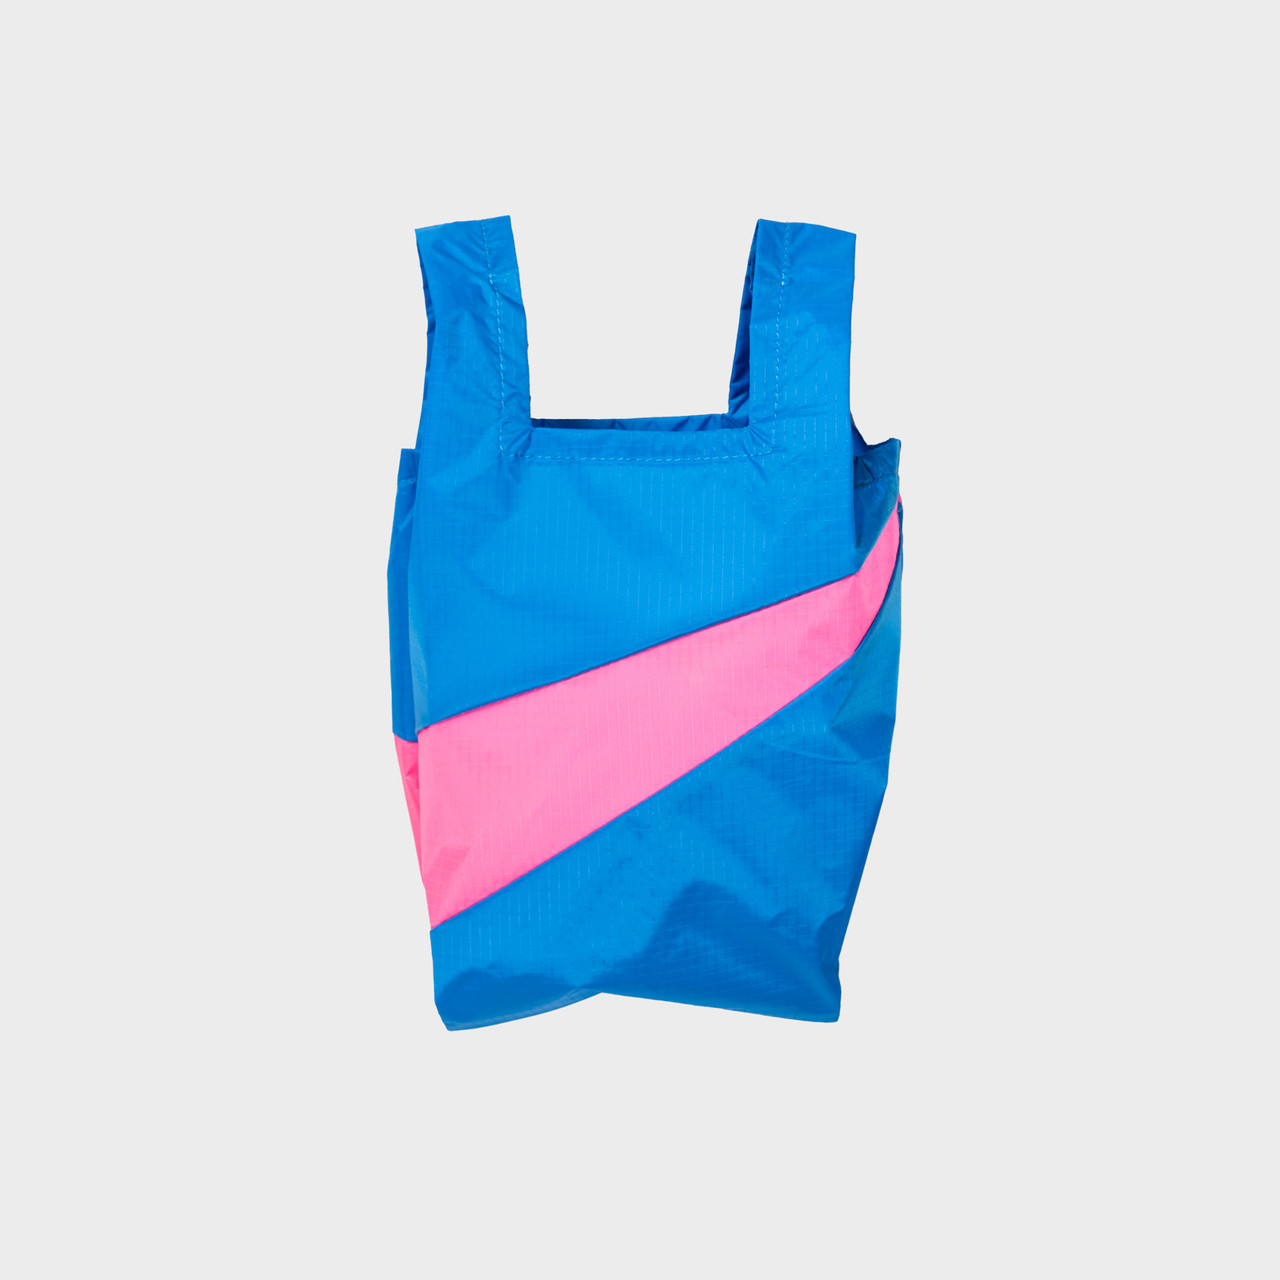 Shopping Bag S Blu-Fucsia -  - Le Conturbanti Concept Store